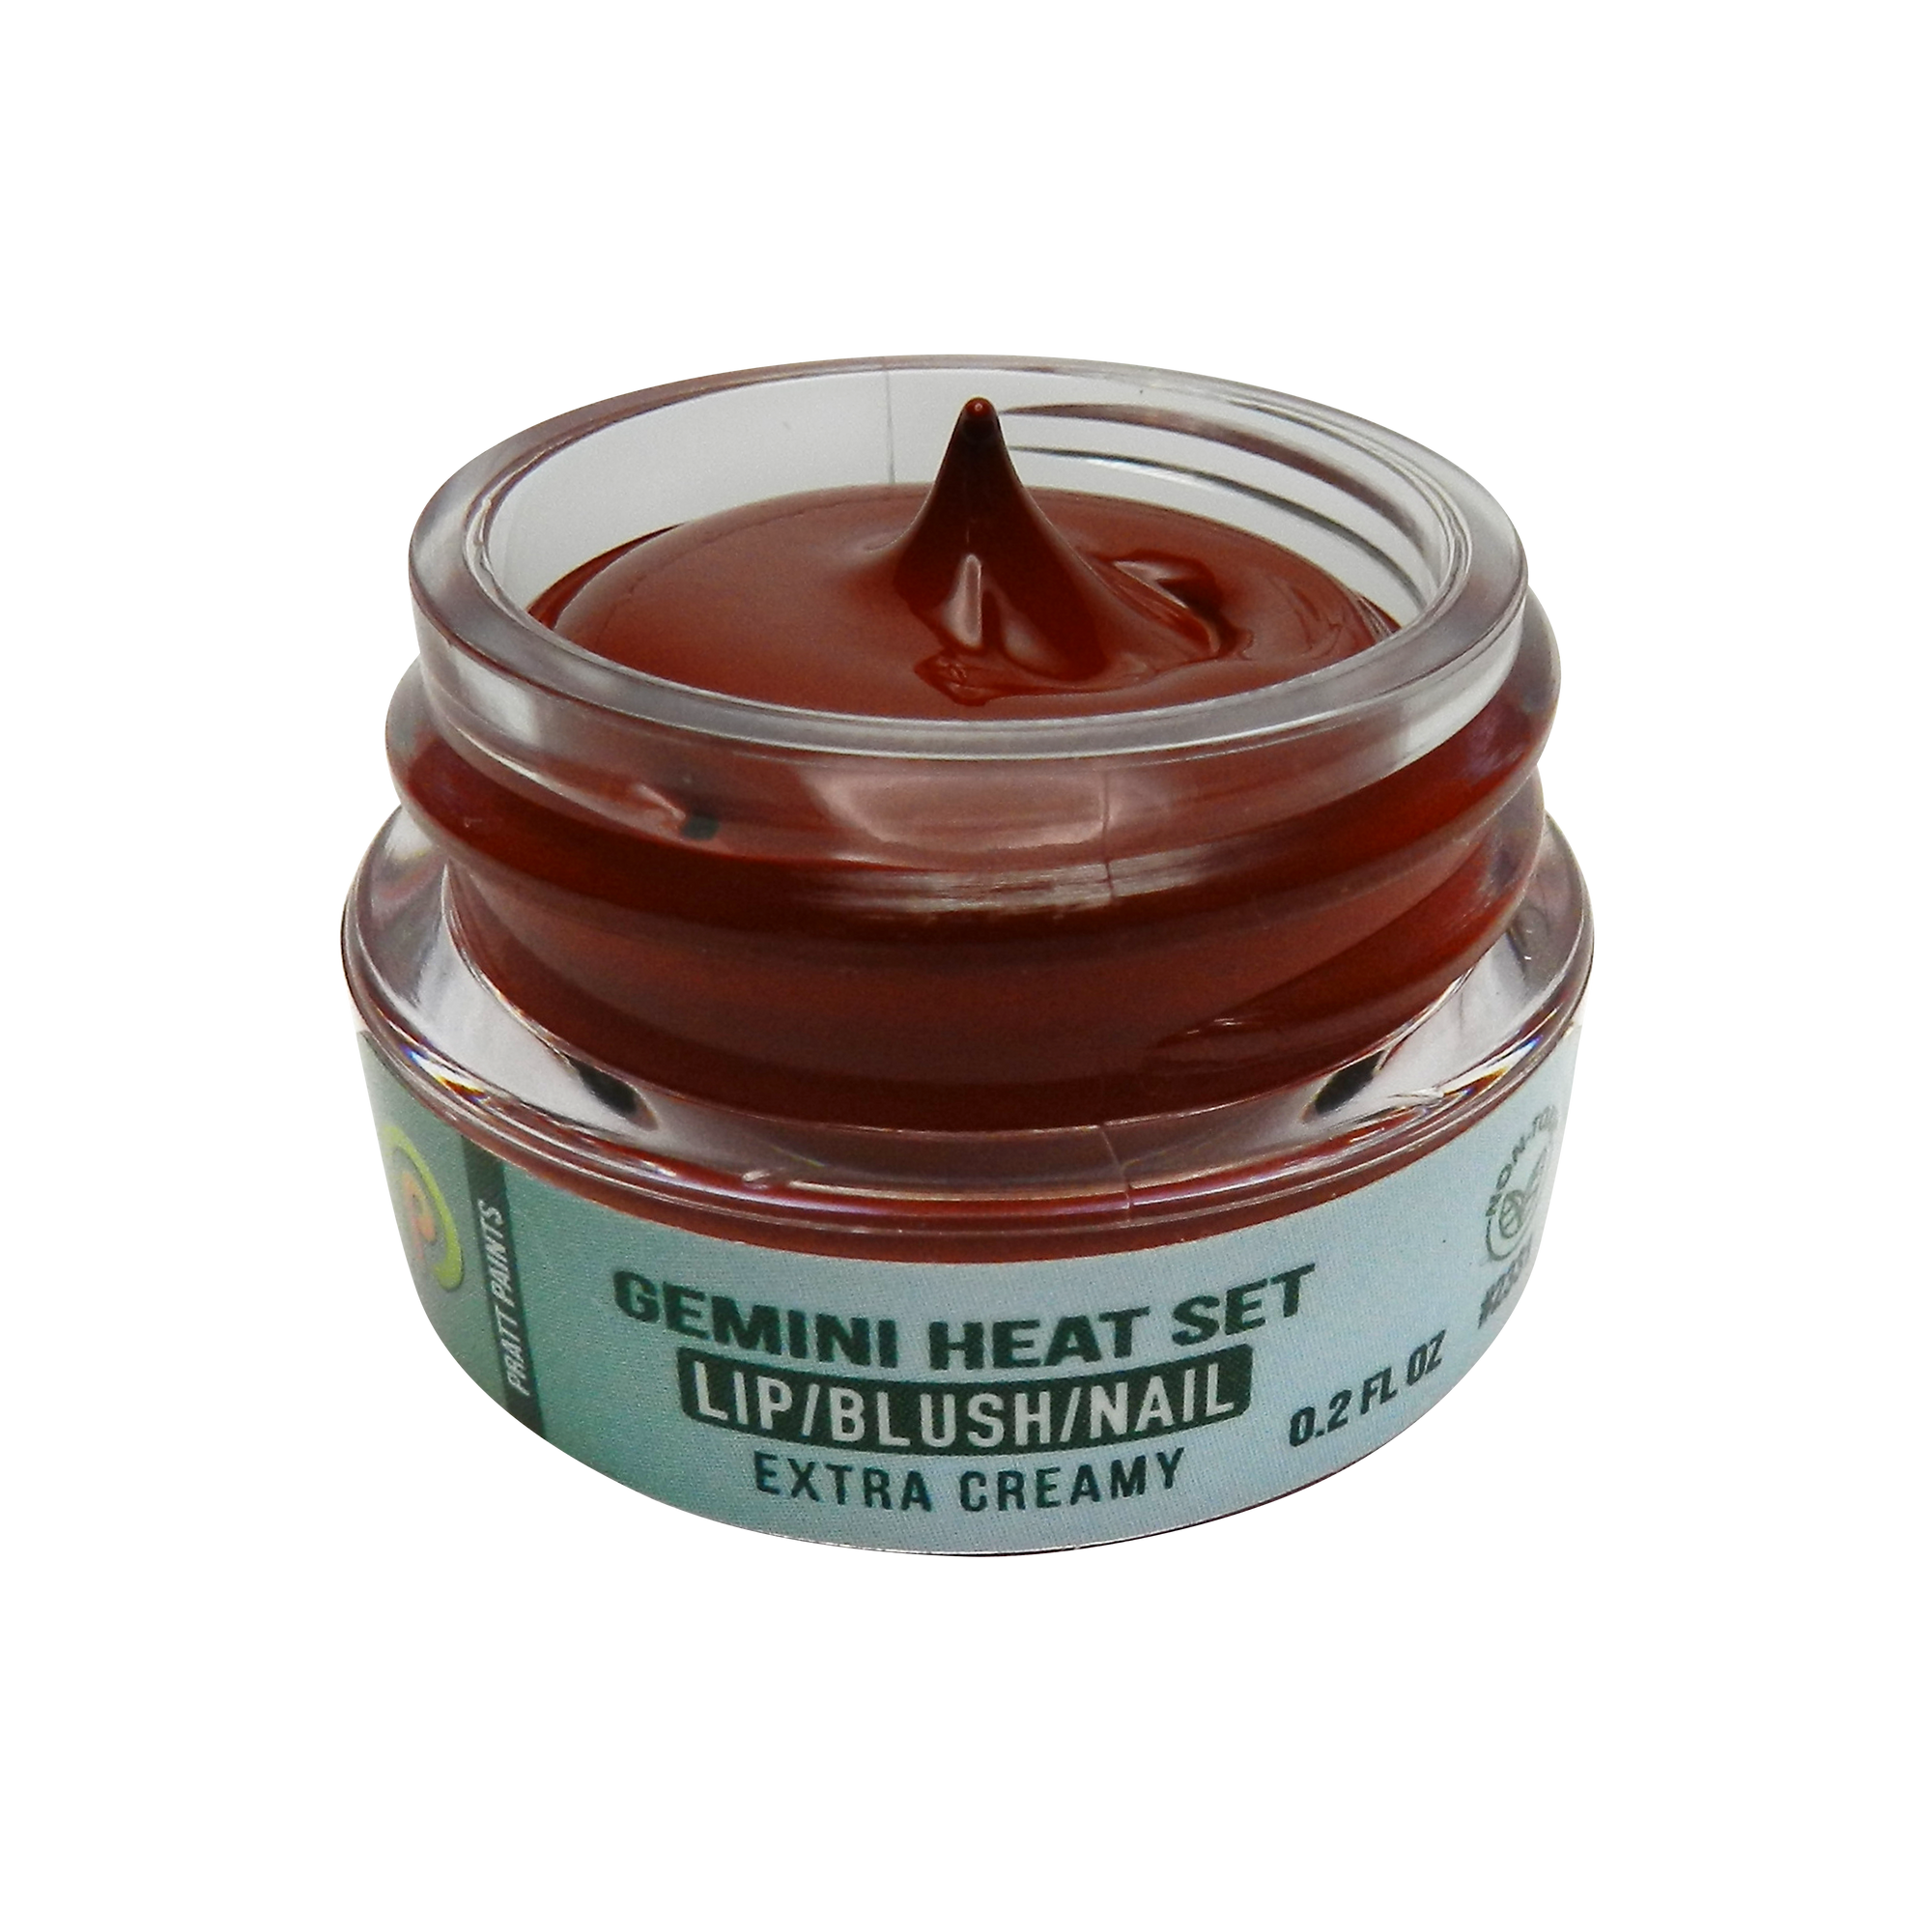 NEW! Lip/Blush/Nail - Gemini Heat Set Paint - 7 grams #2331